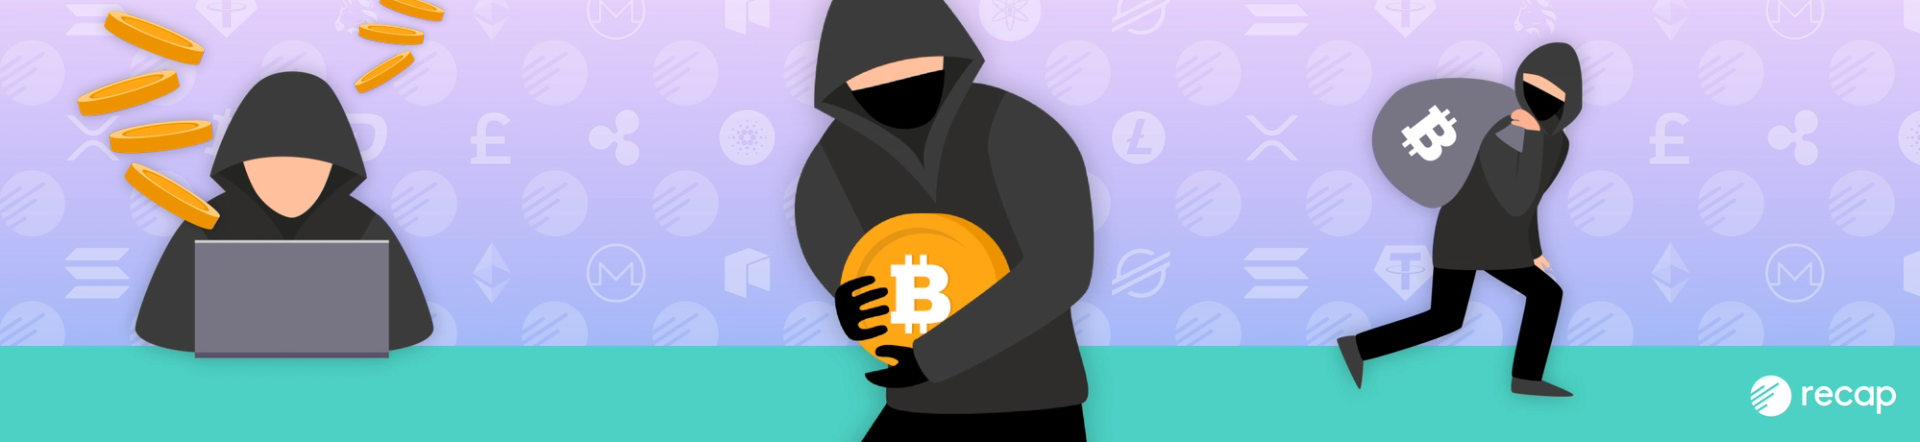 Recap illustration: stolen cryptocurrency